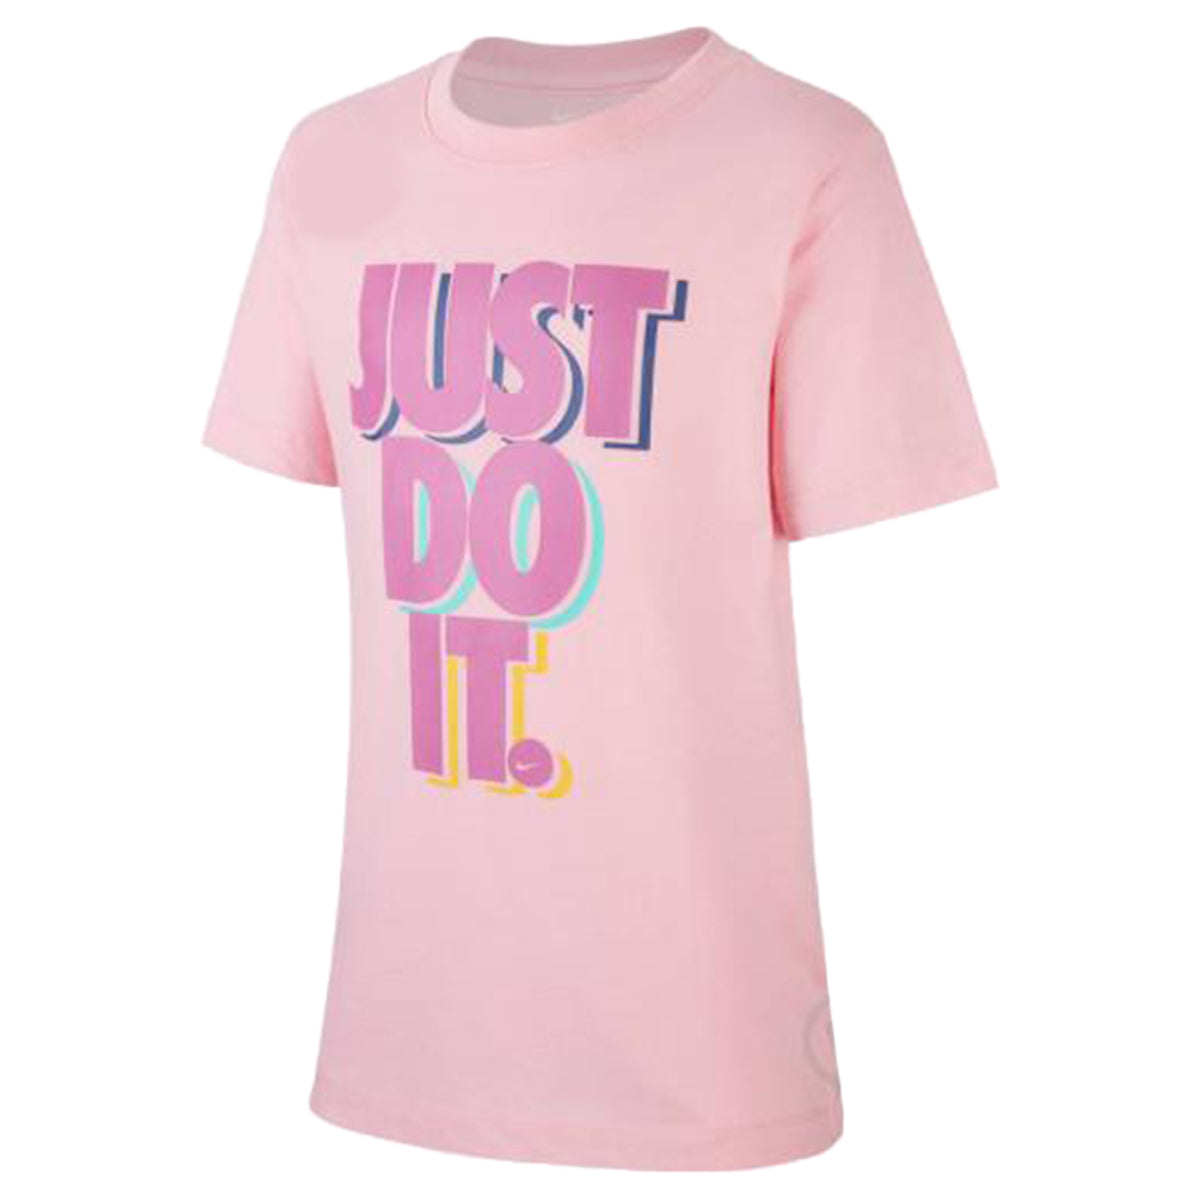 Nike Sportswear Just Do It T-shirt Big Kids Style : Cu4569